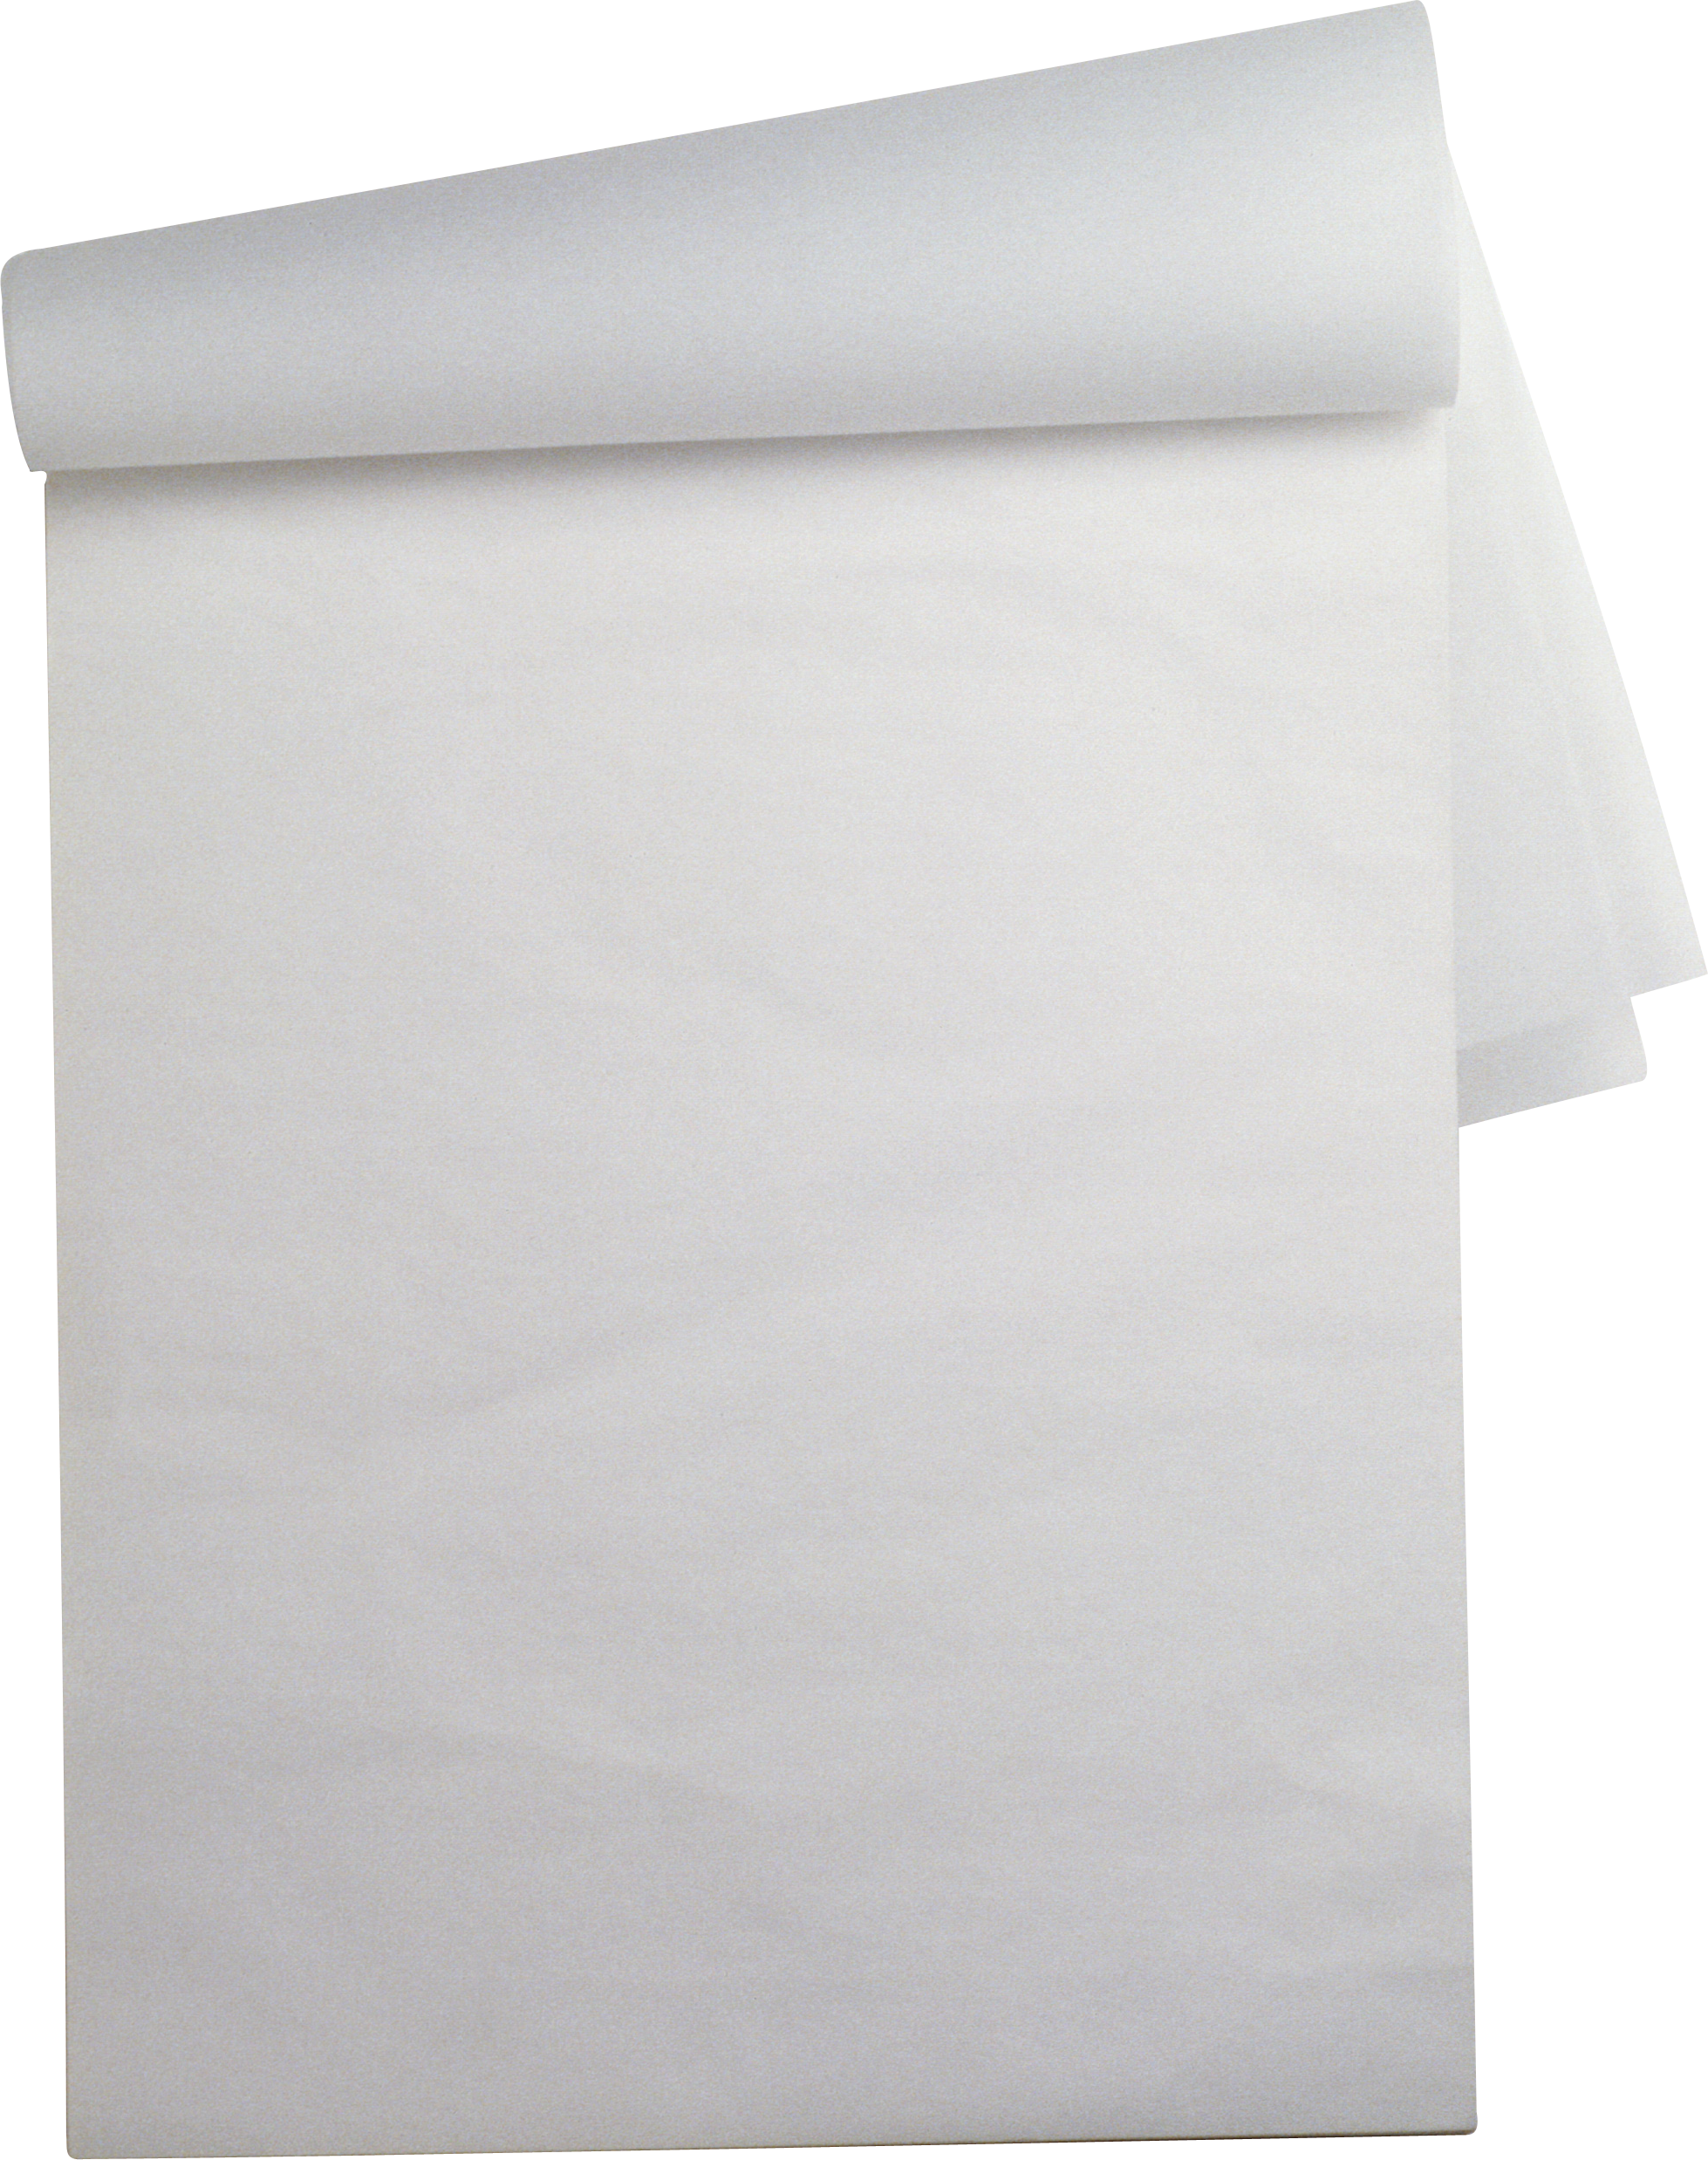 Paper Sheet PNG Clipart